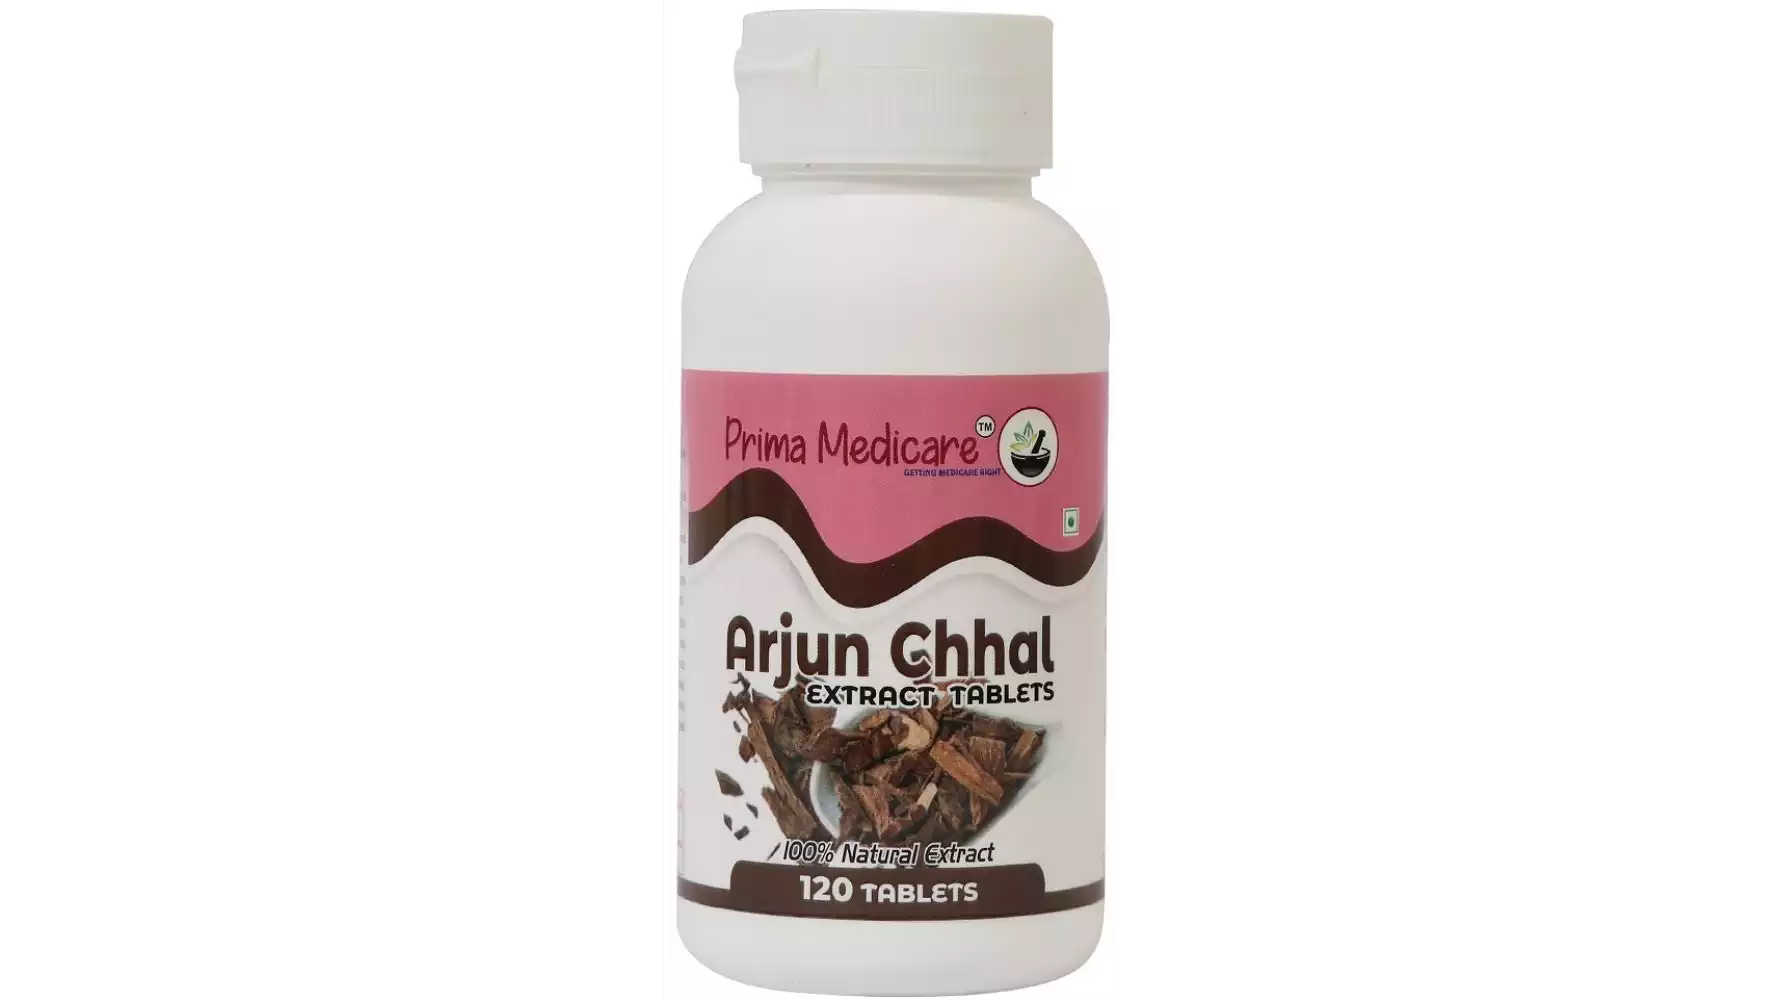 Prima Medicare Arjun Chaal Extract Tablets (120tab)